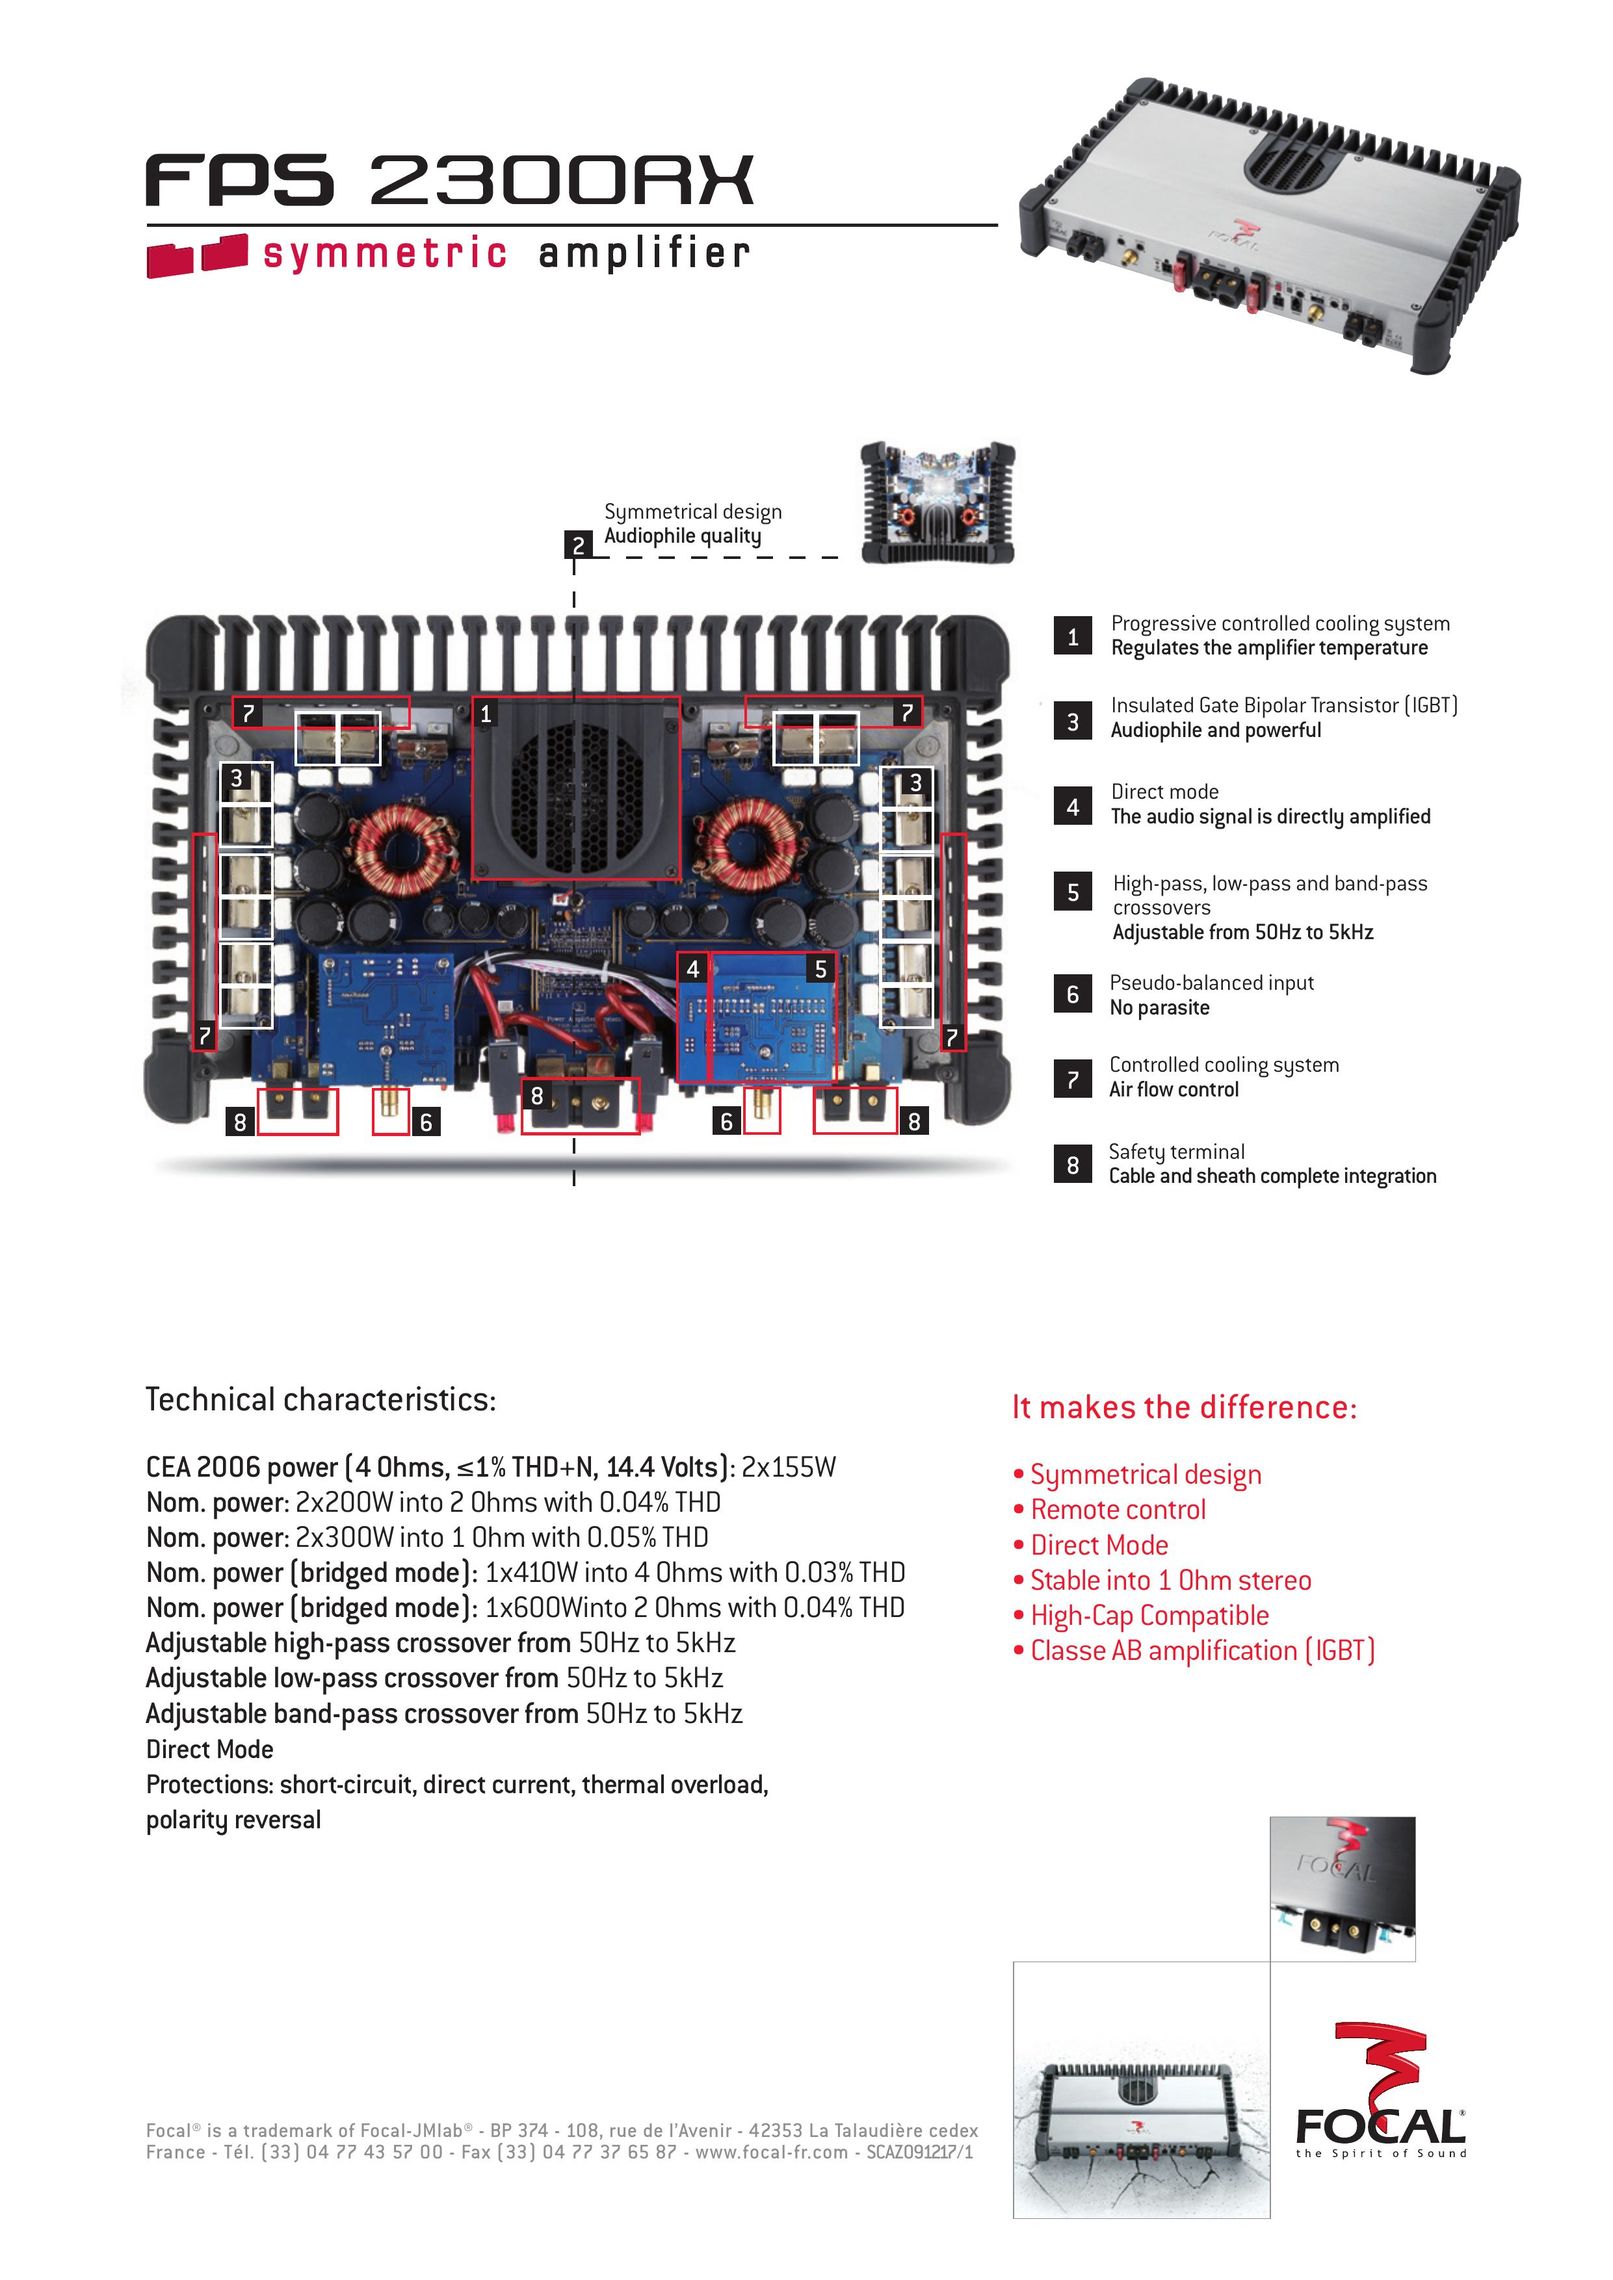 Focal FPS 2300RX Car Amplifier User Manual